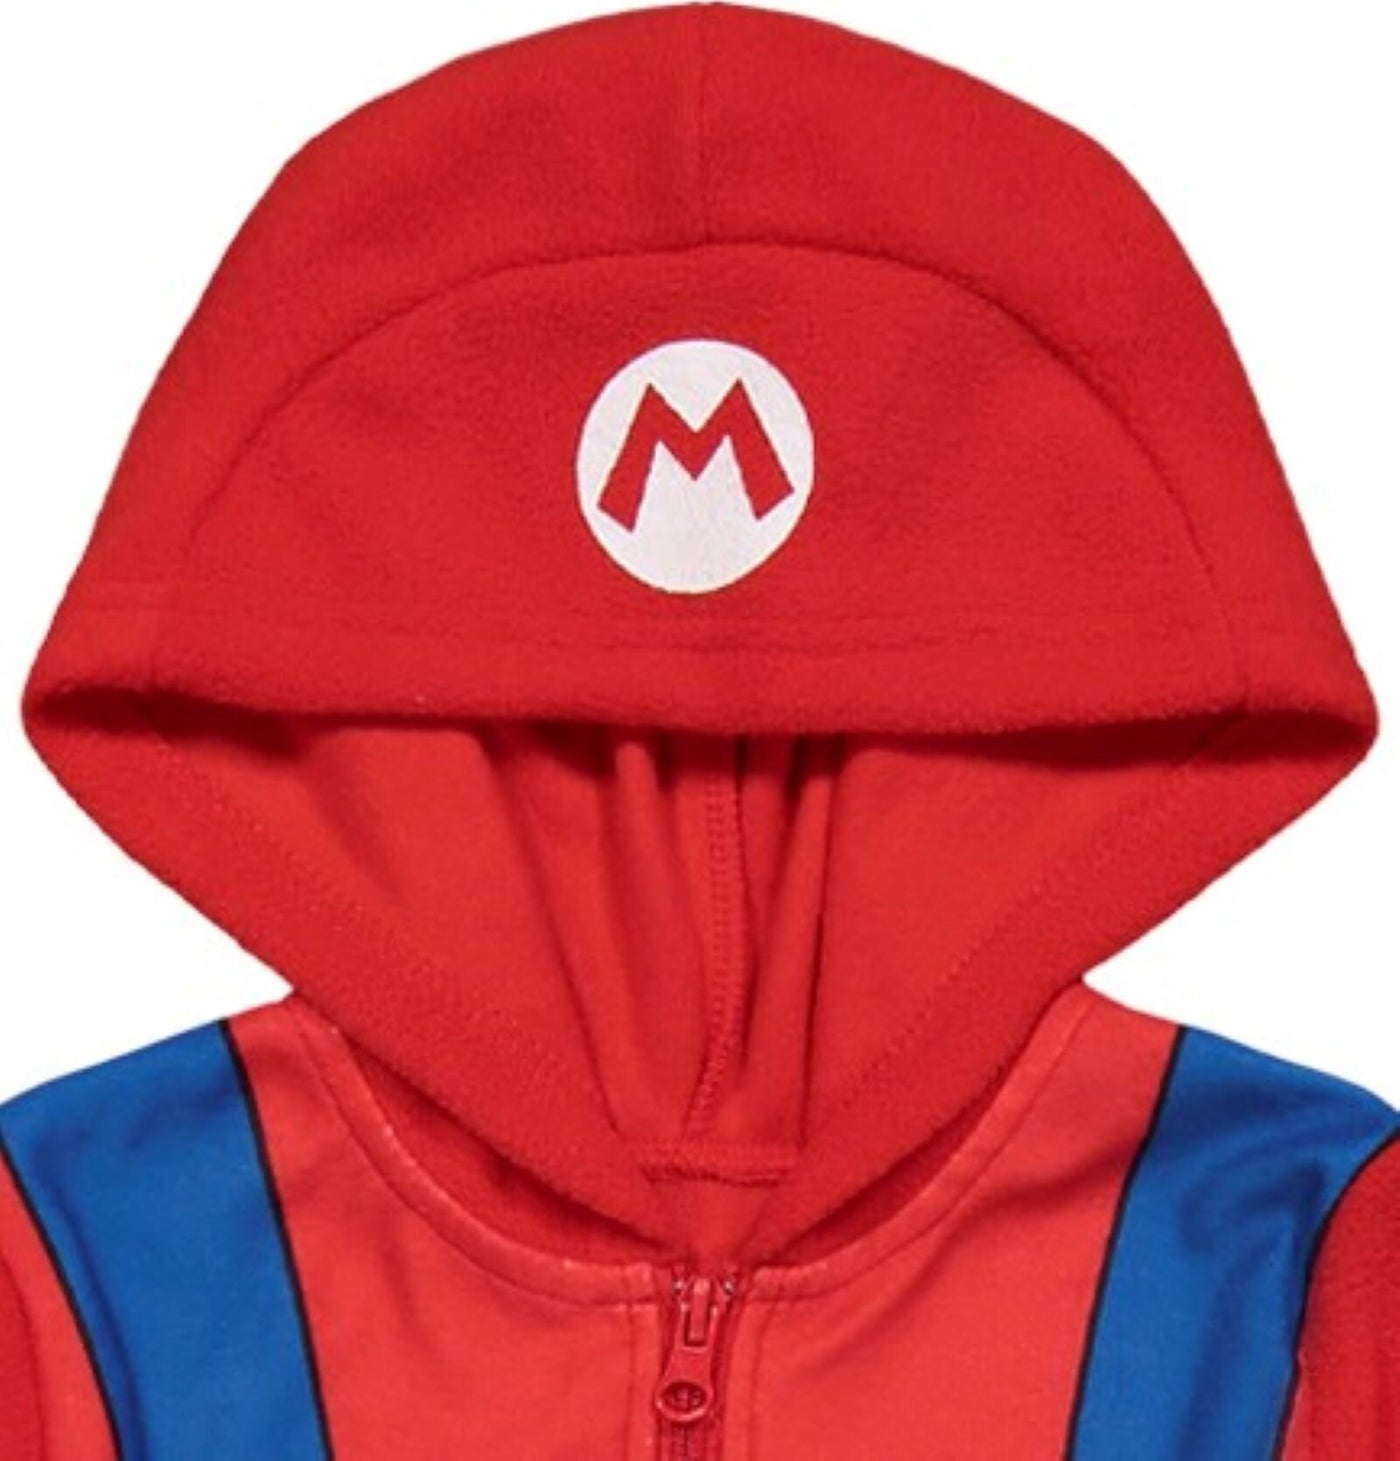 SUPER MARIO Nintendo Mario Zip Up Costume Pajama Coverall